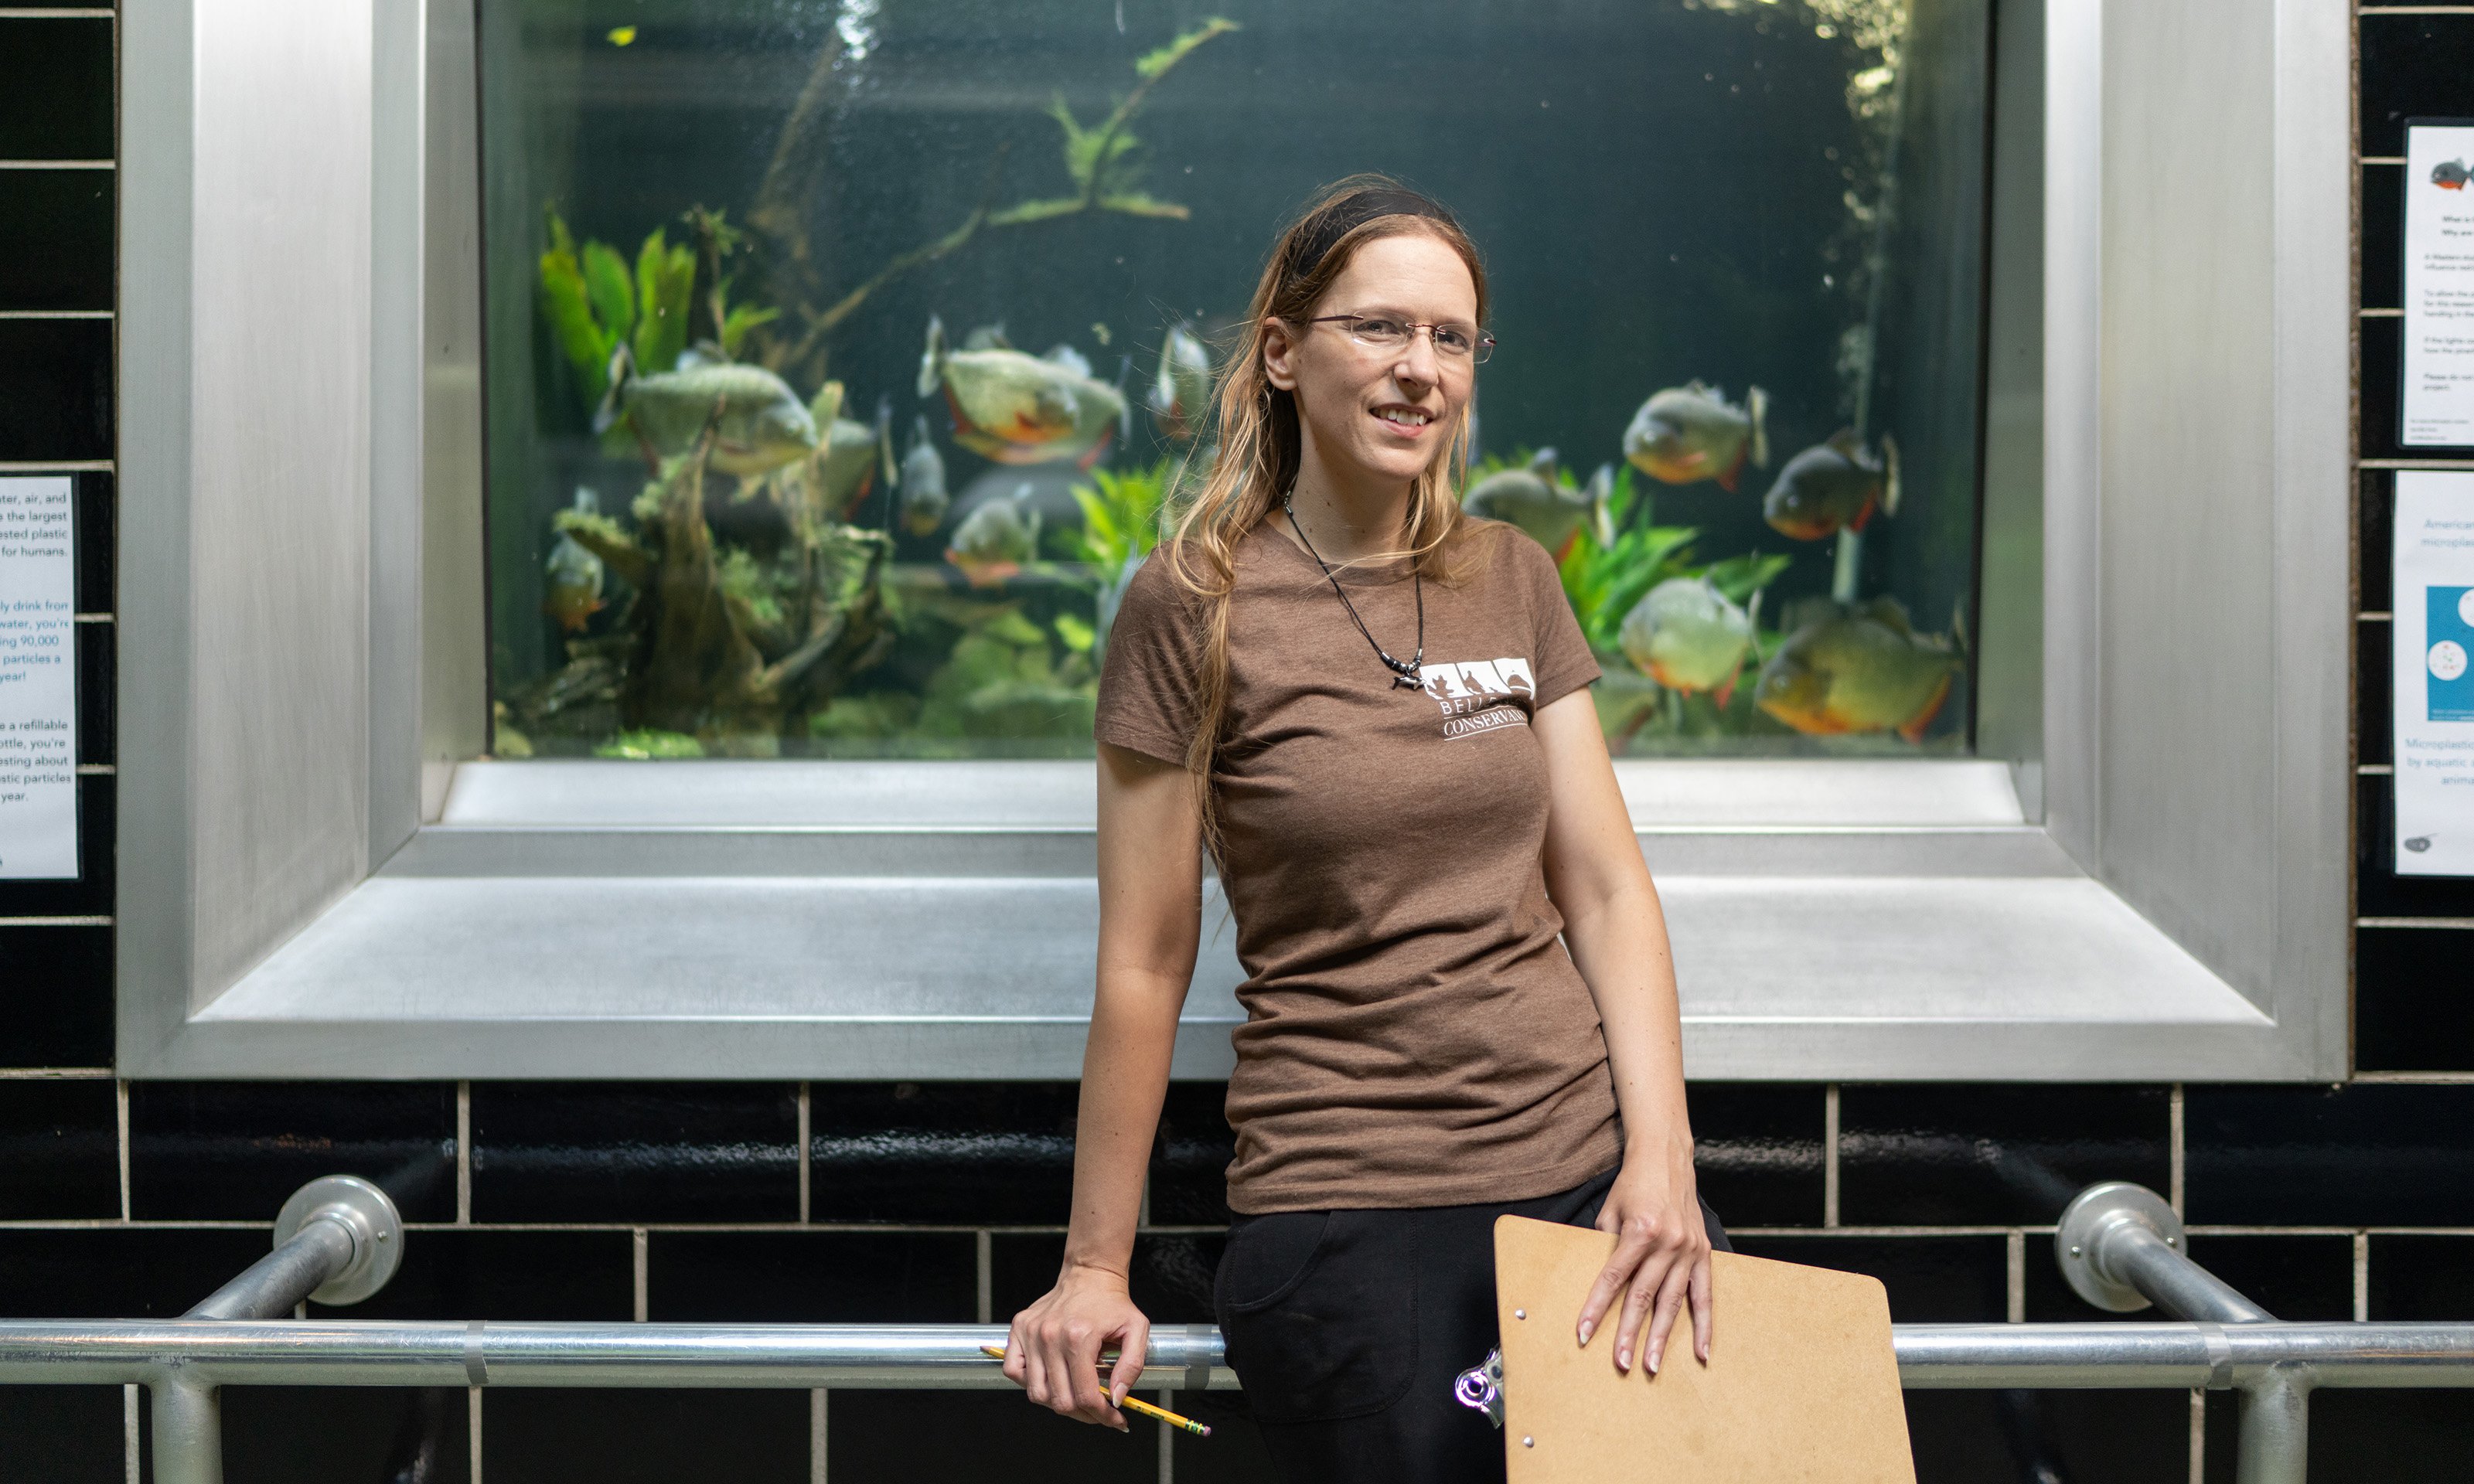 Woman standing in front of aquarium tank